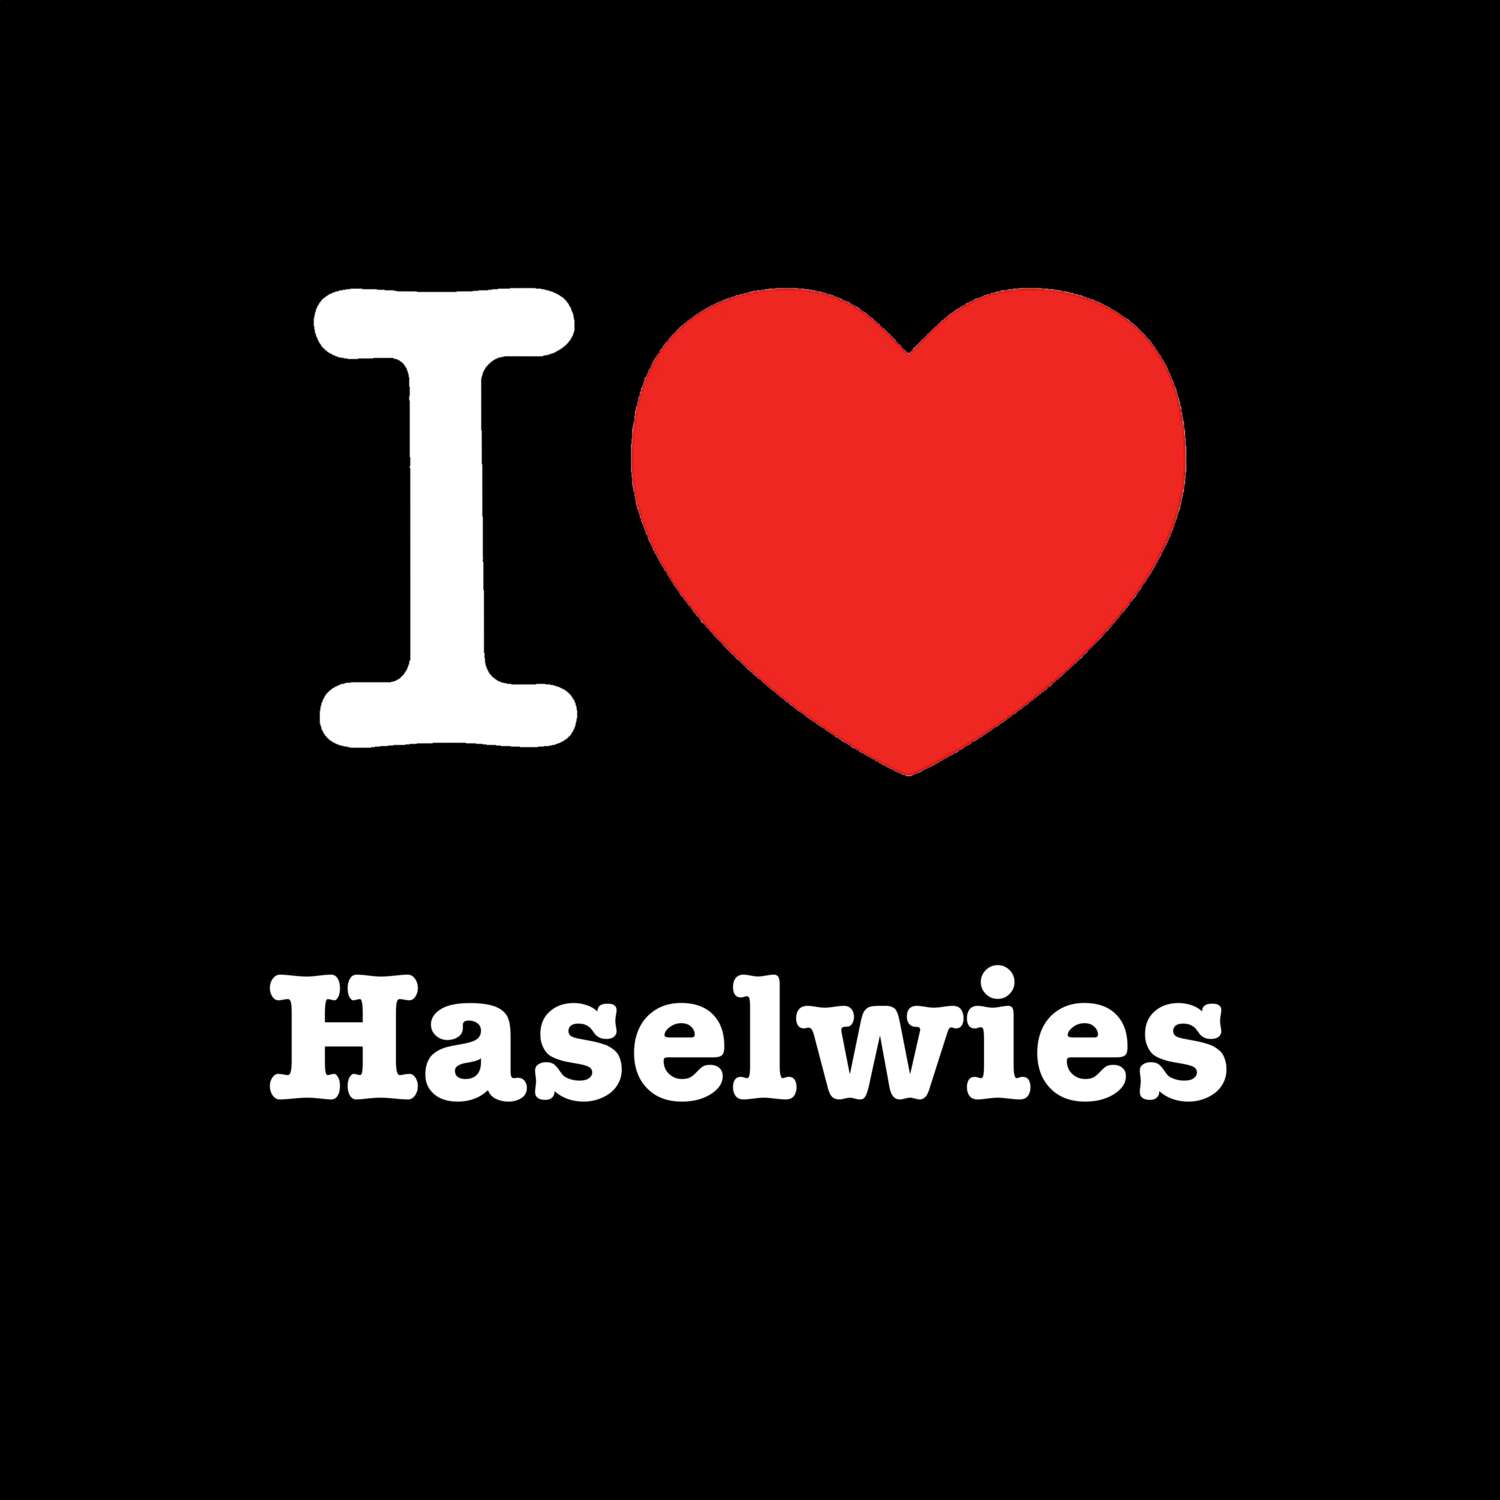 Haselwies T-Shirt »I love«